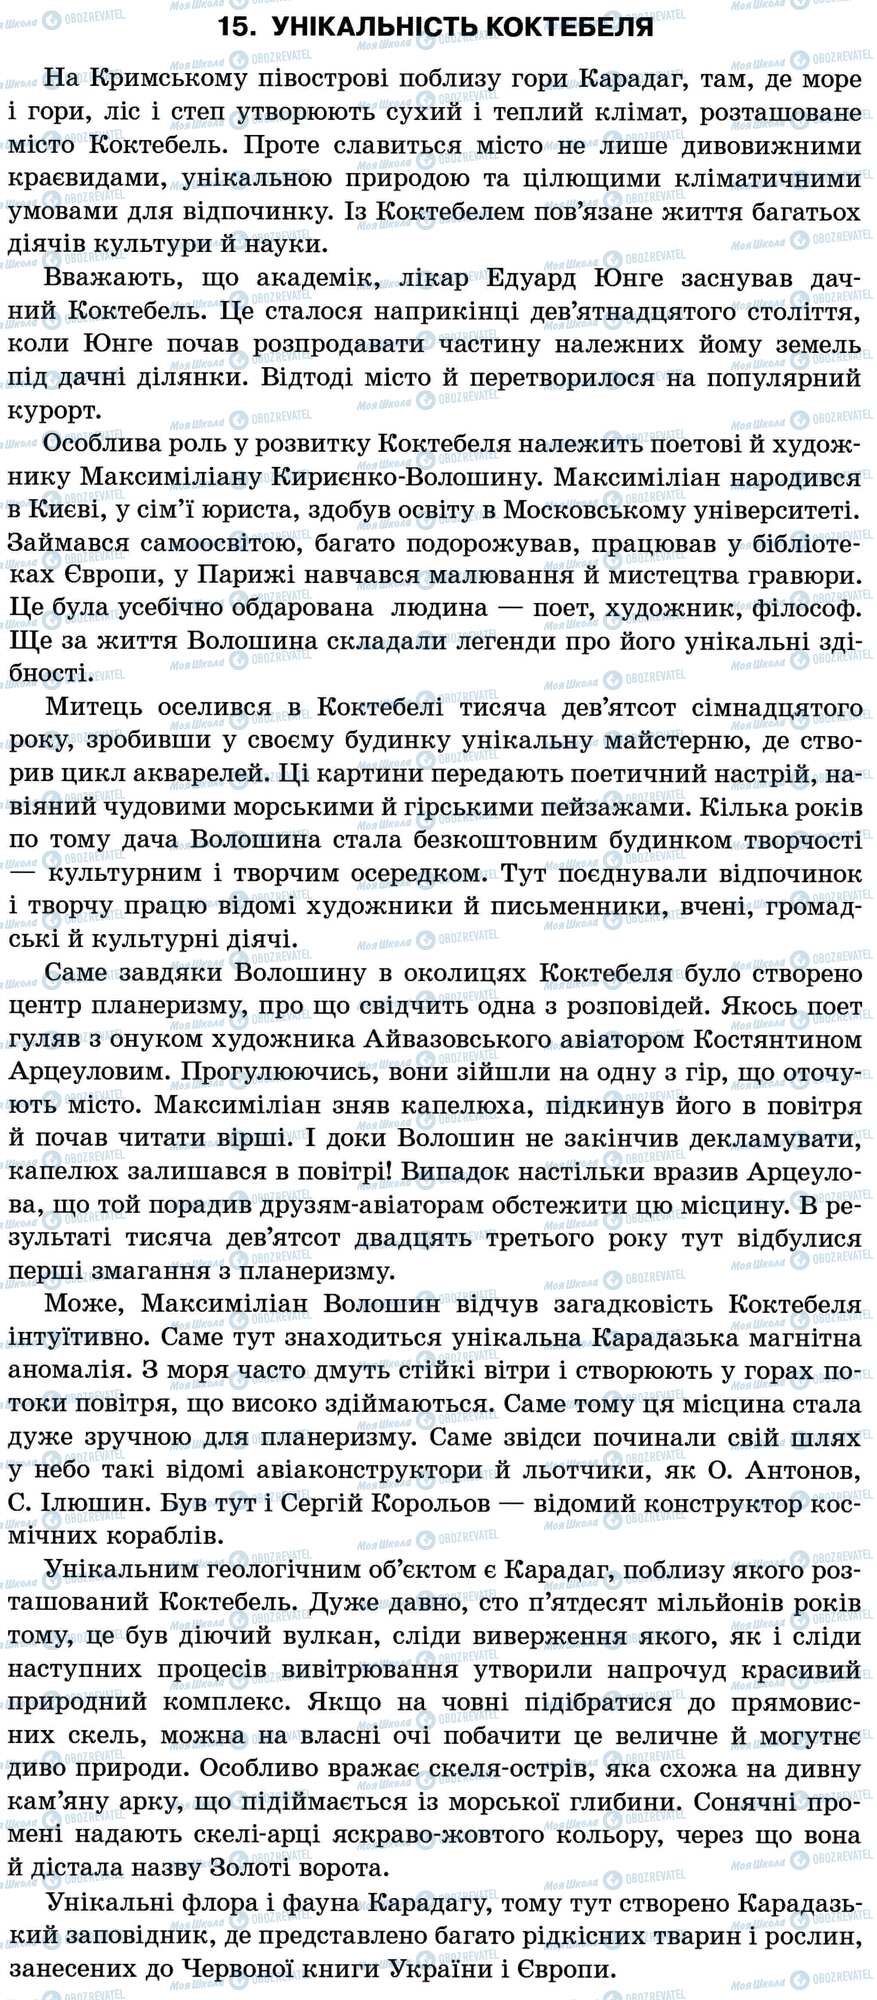 ДПА Укр мова 11 класс страница 15. Унікальність Коктебеля